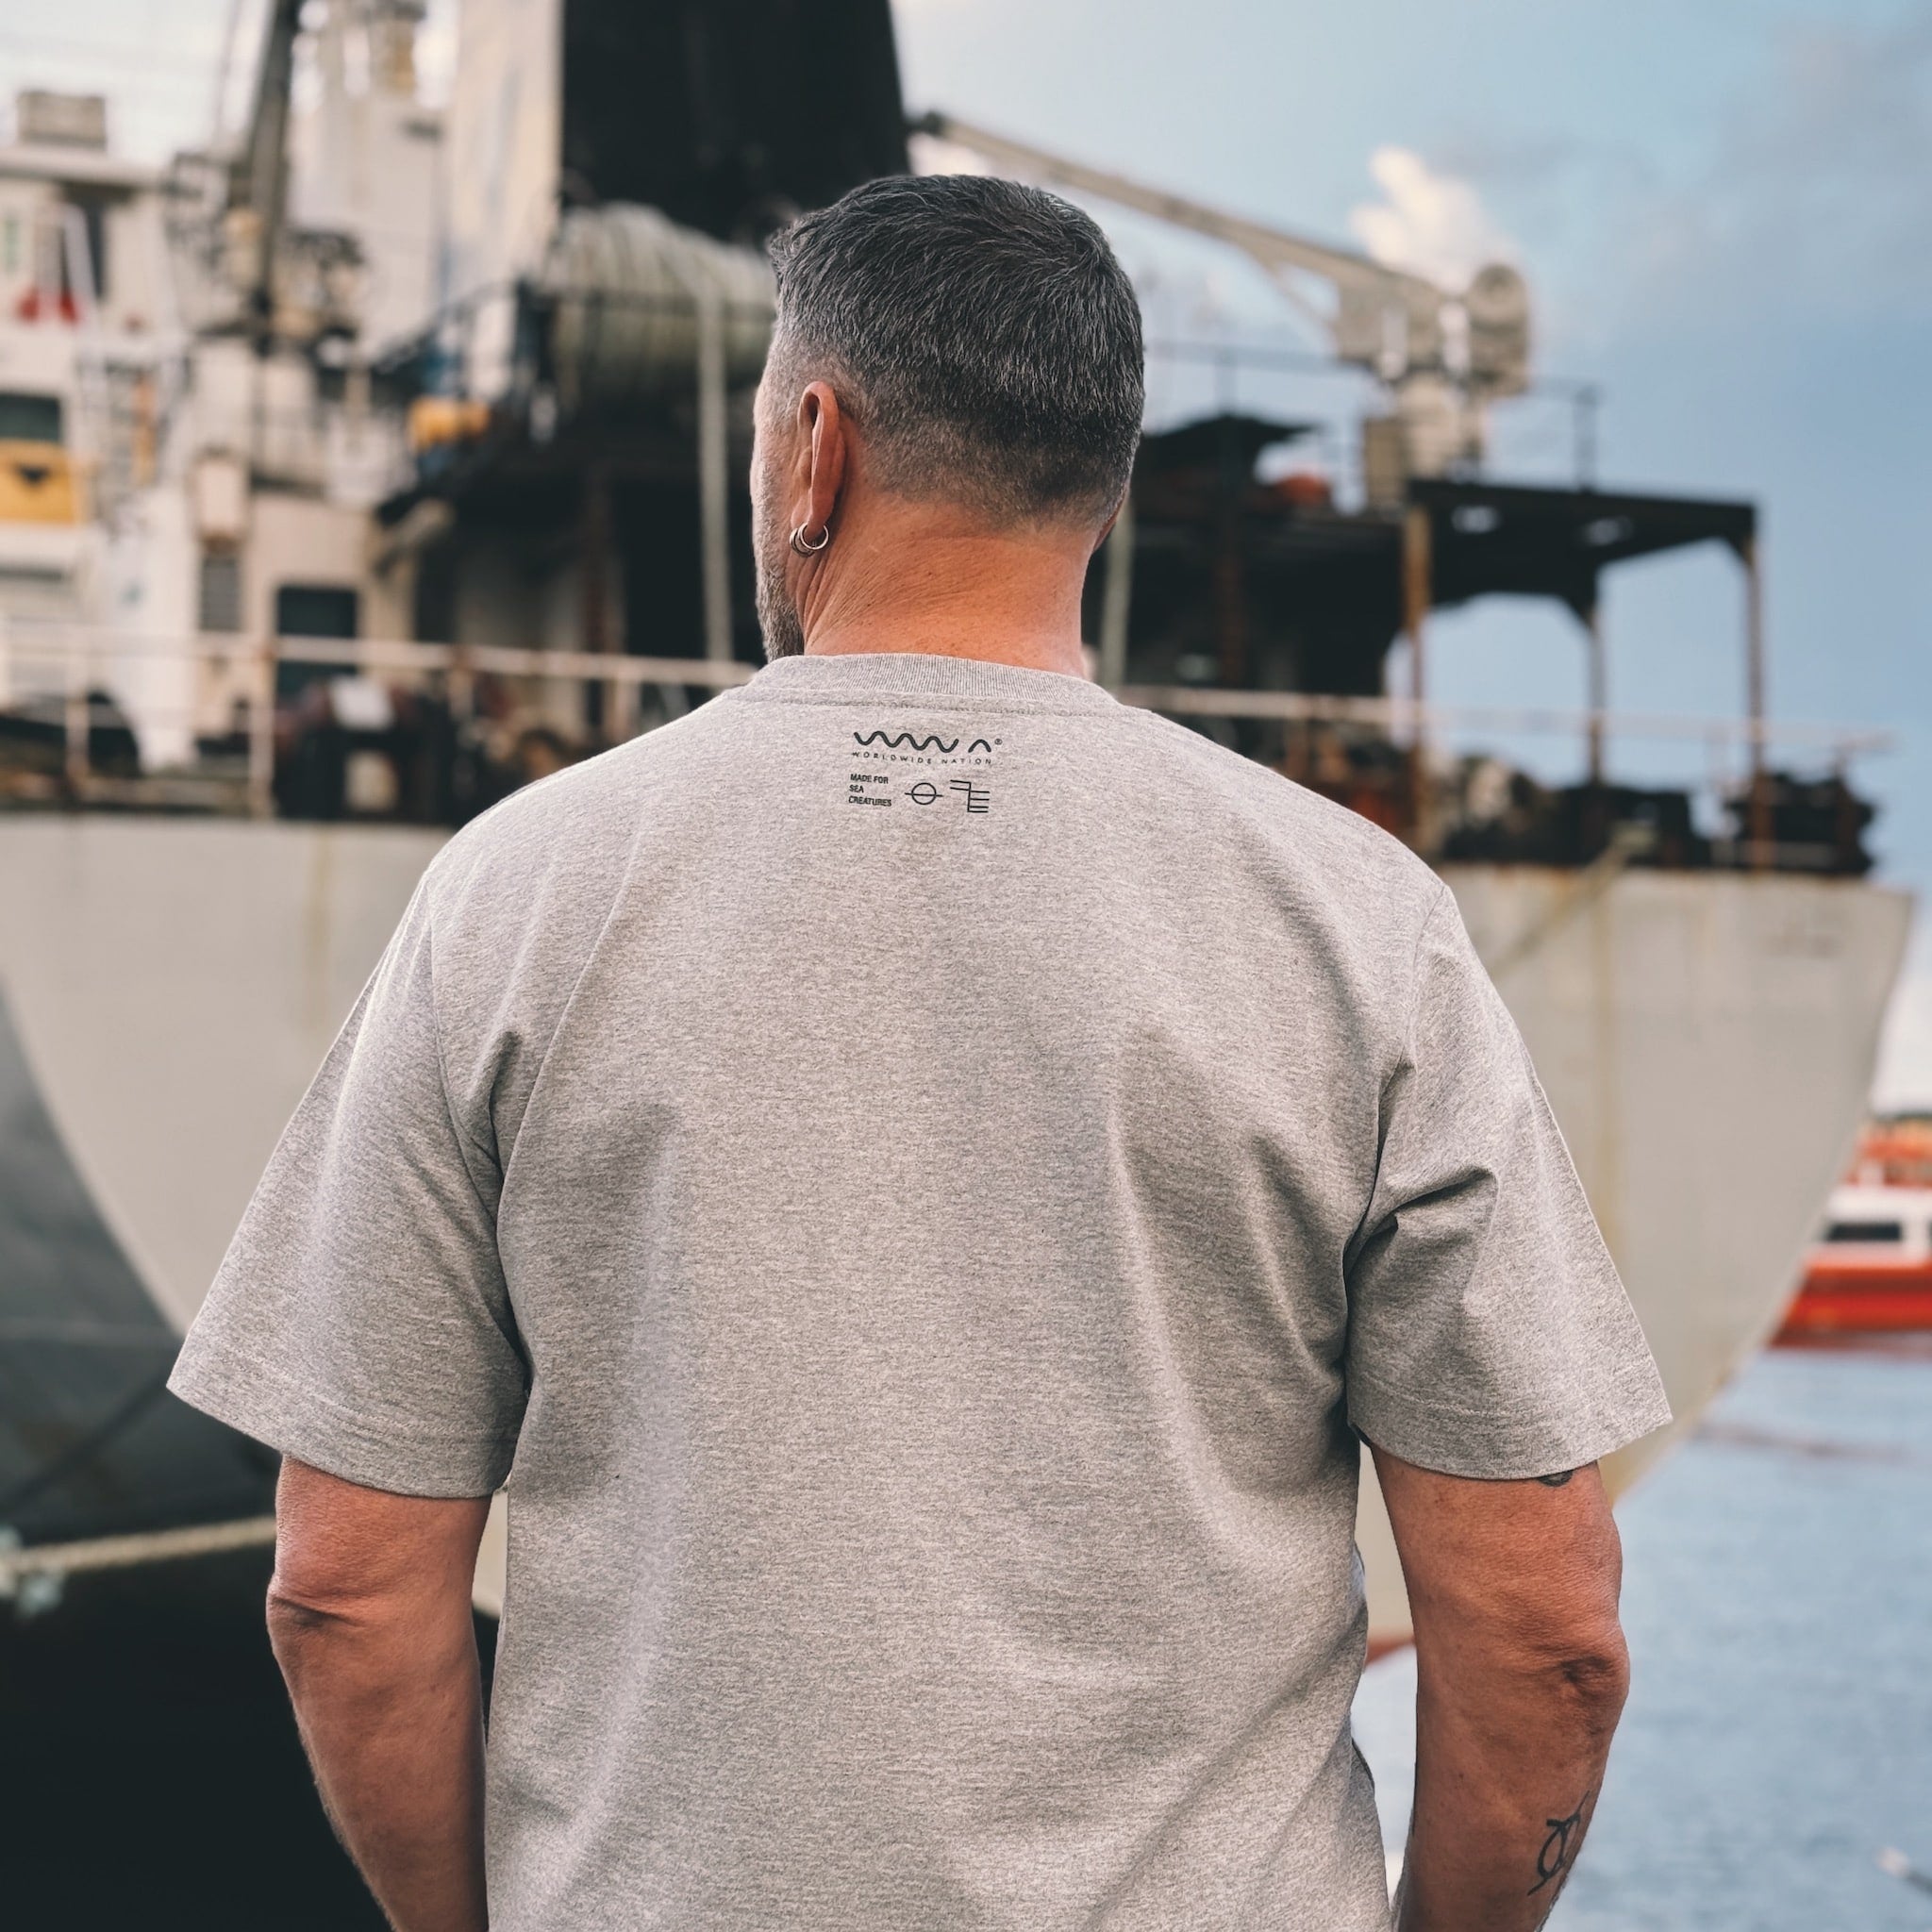 Load Line Maritime Heavy-Weight T-Shirt - Worldwide Nation